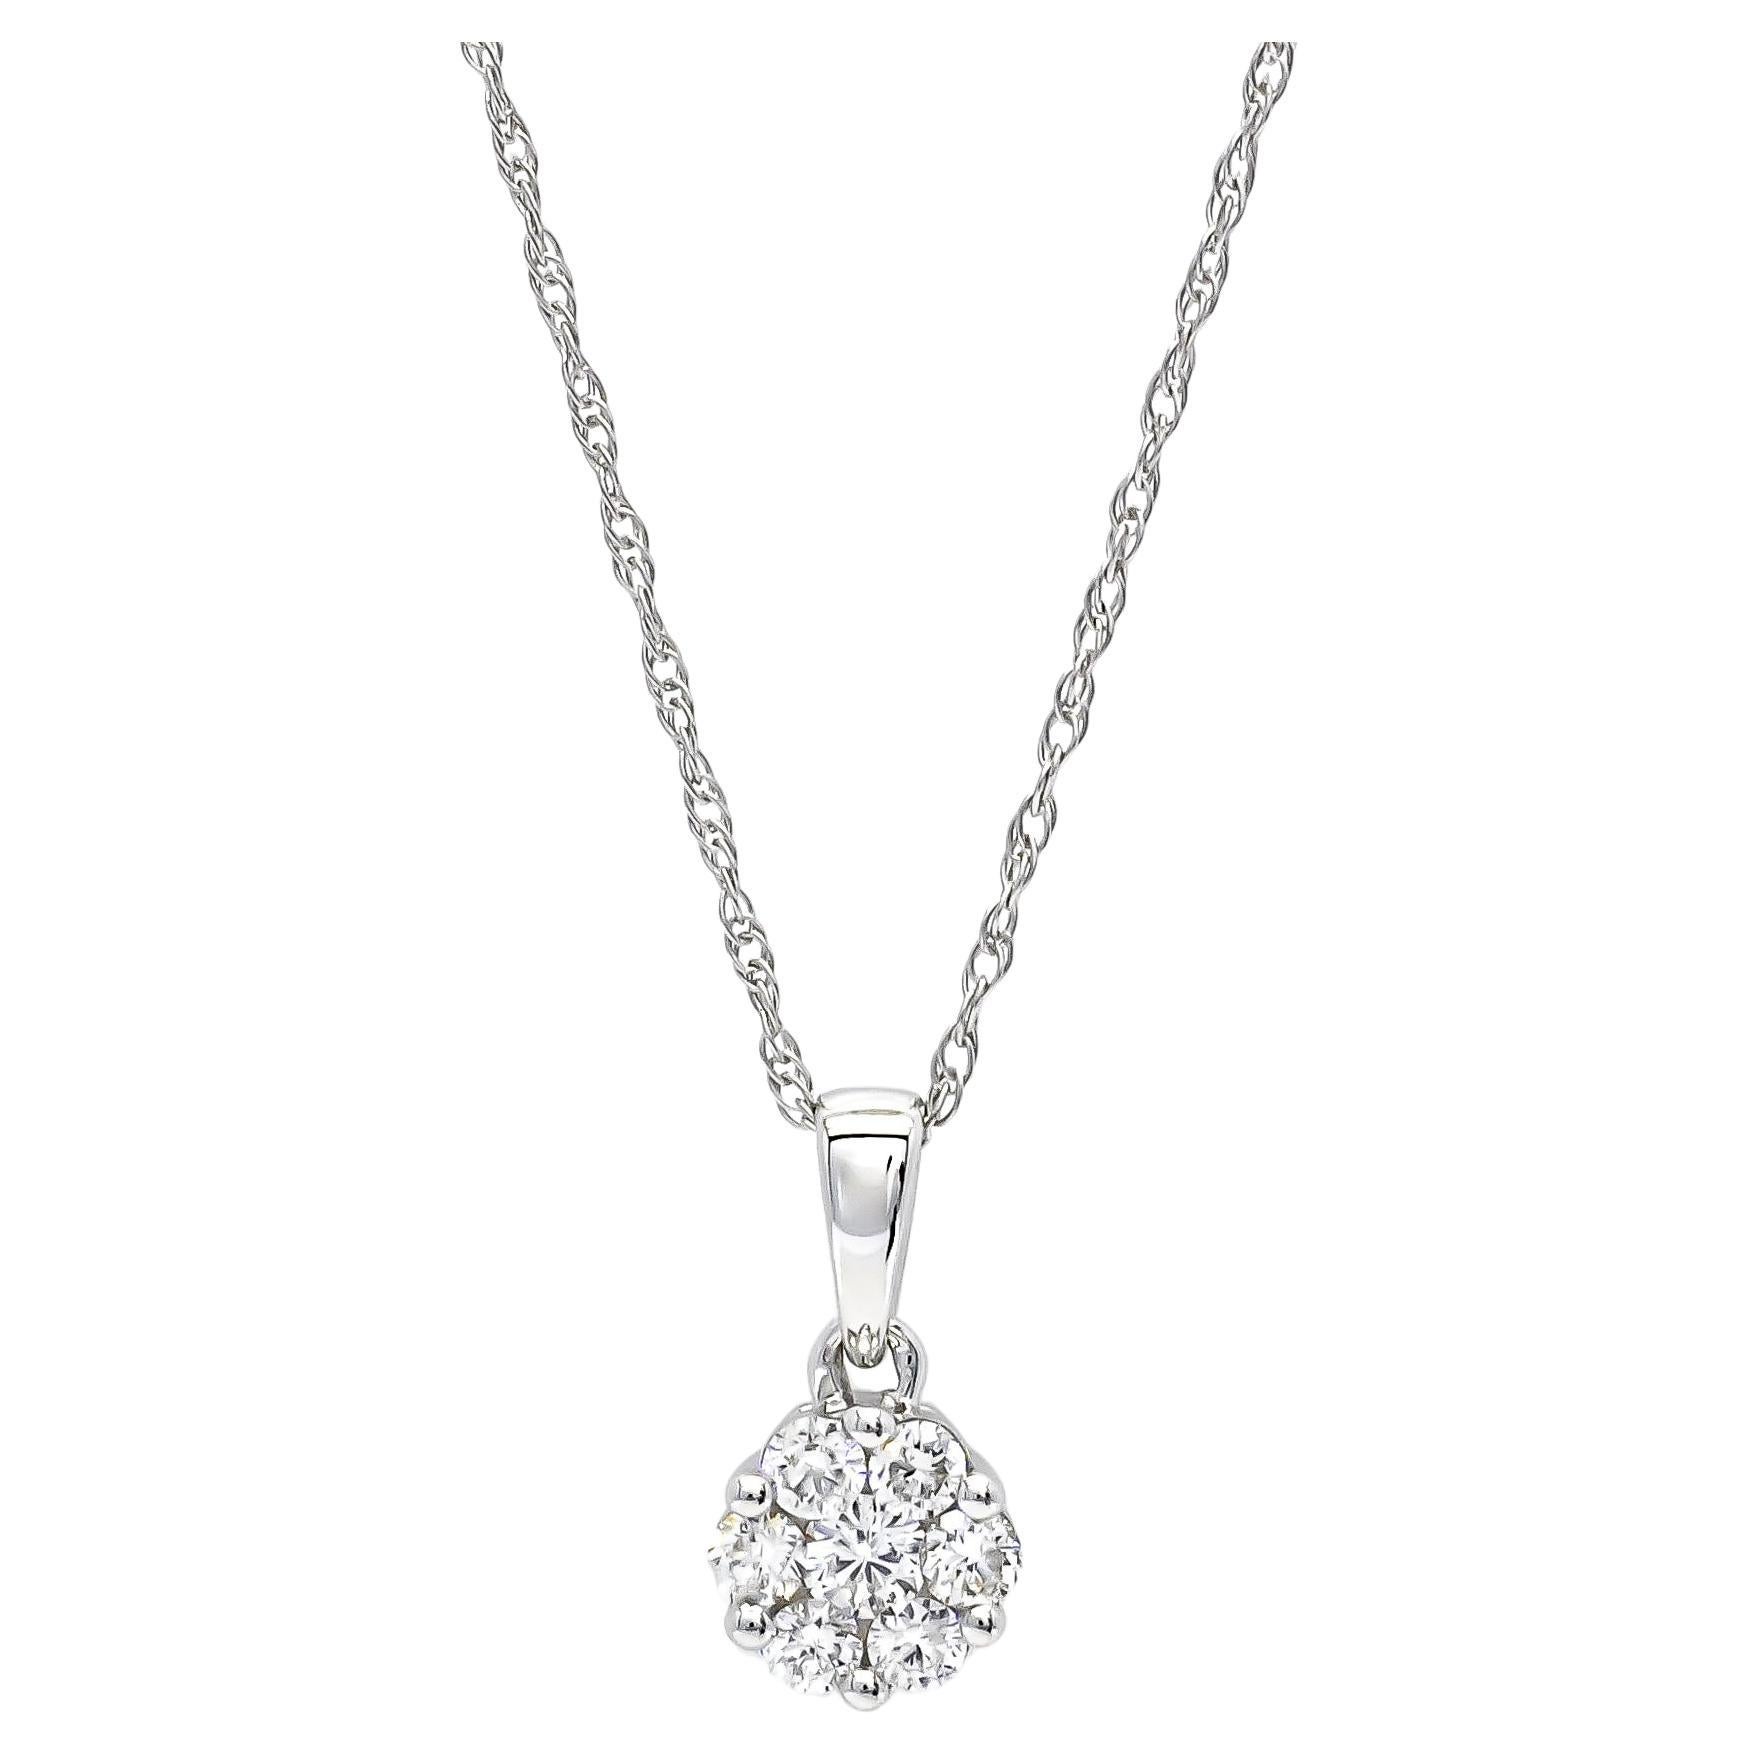  Natural Diamonds 1.00 carats 18 Karat White Gold Classic Pendant Necklace